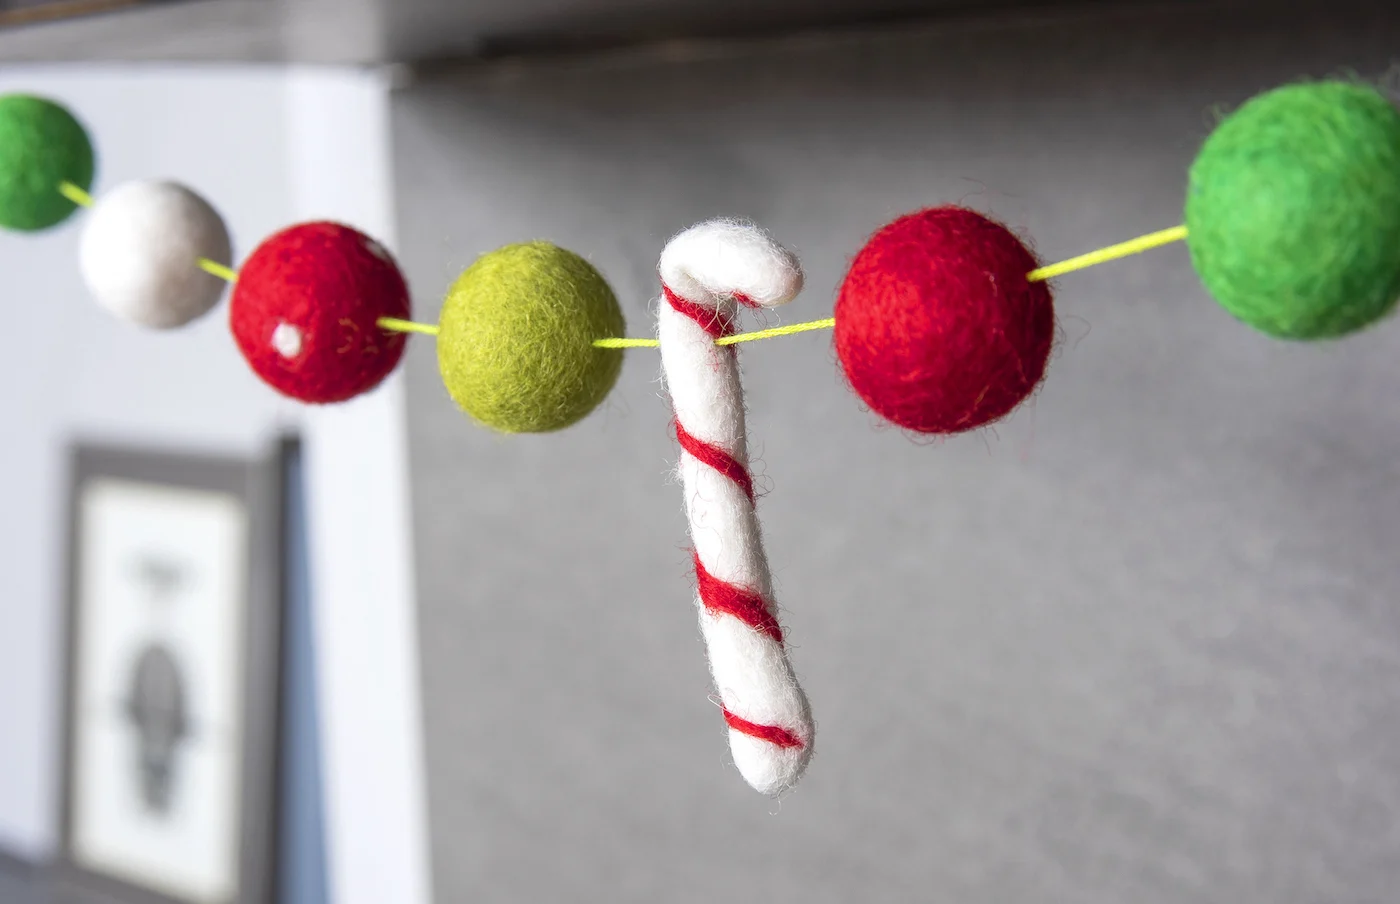 Make a Felt Ball Garland the Easy Way - DIY Candy